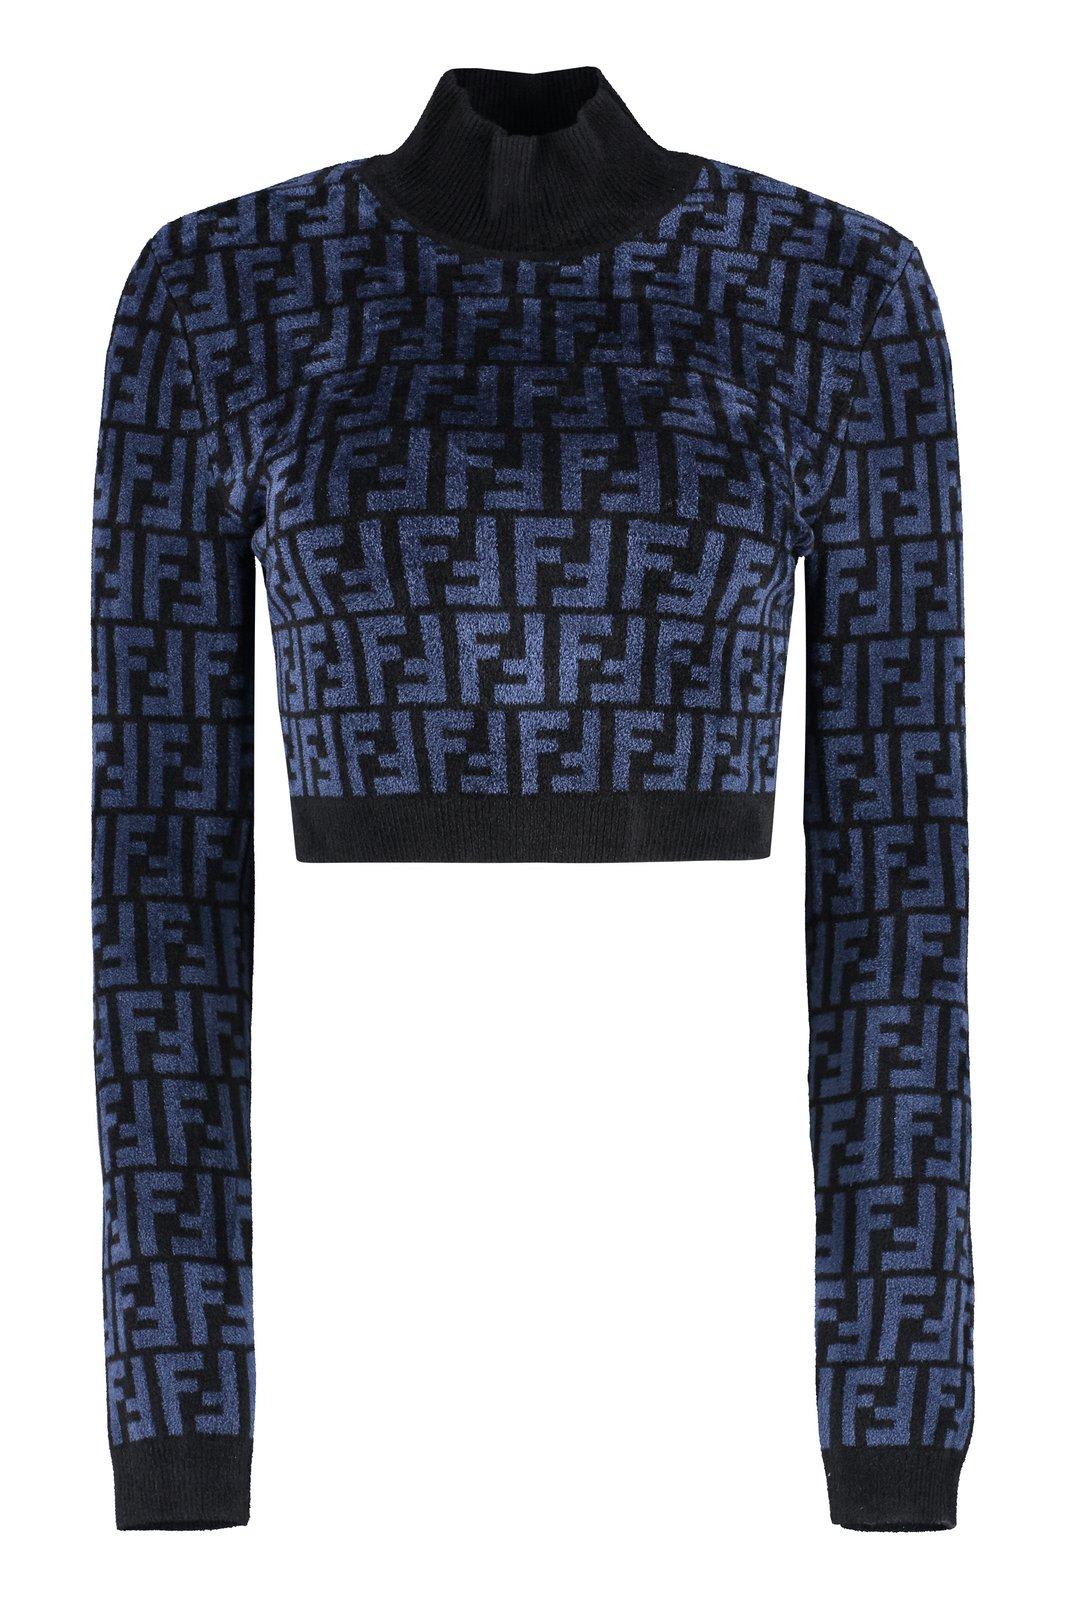 Fendi Monogram Jacqaurd Cropped Knit Jumper